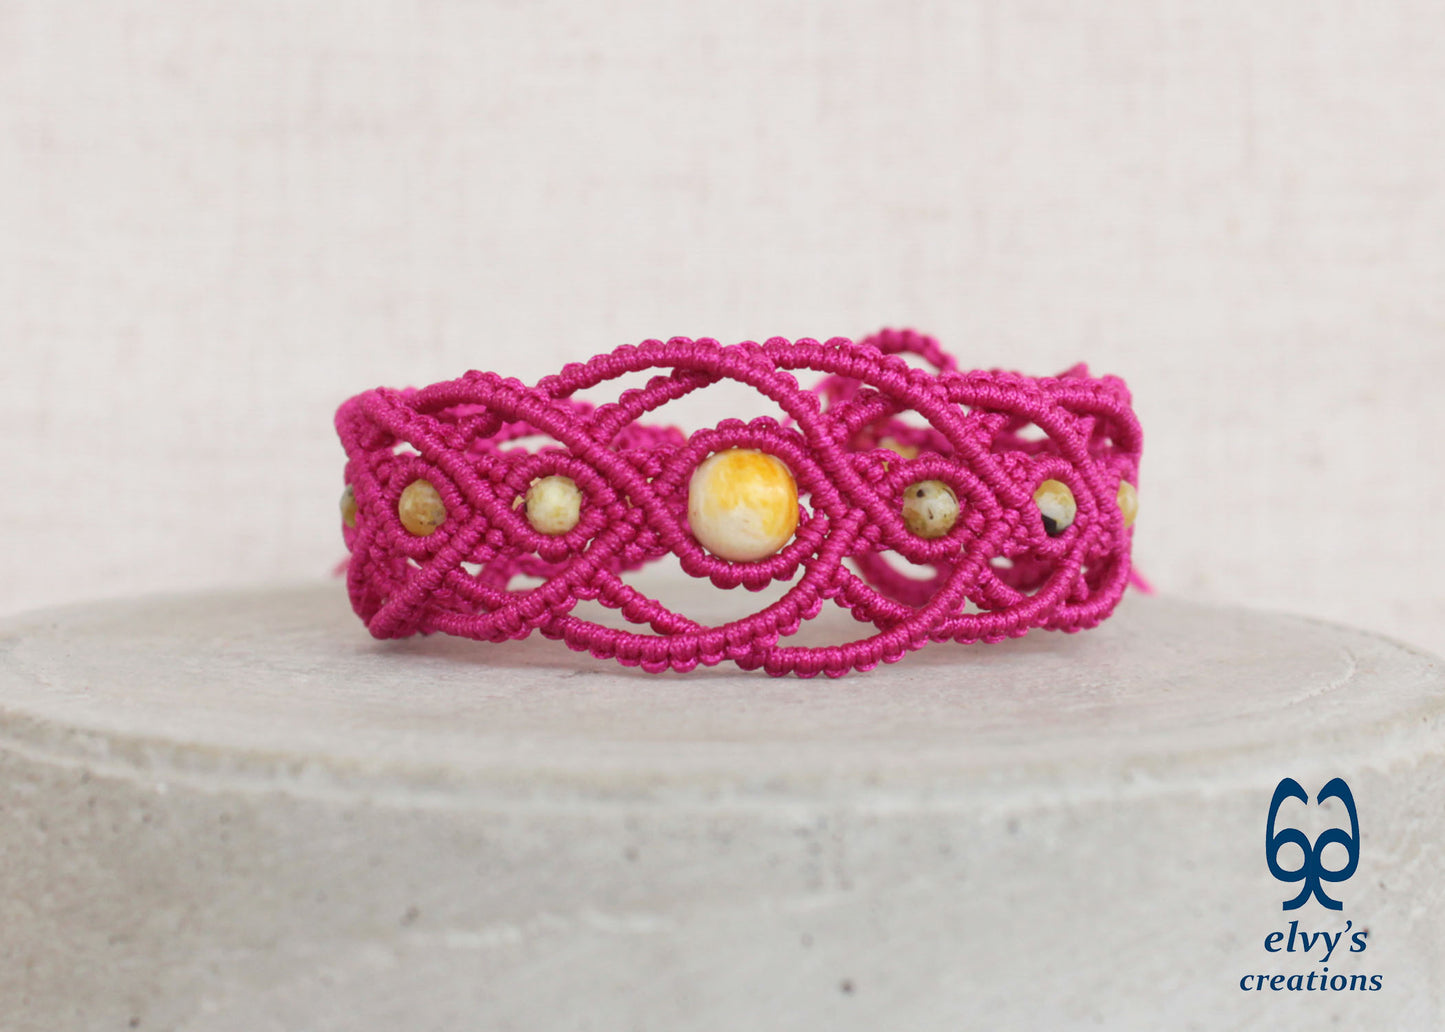 Handmade Macrame Pink Macrame Bracelet for Woman Adjustable Bracelet for Gift